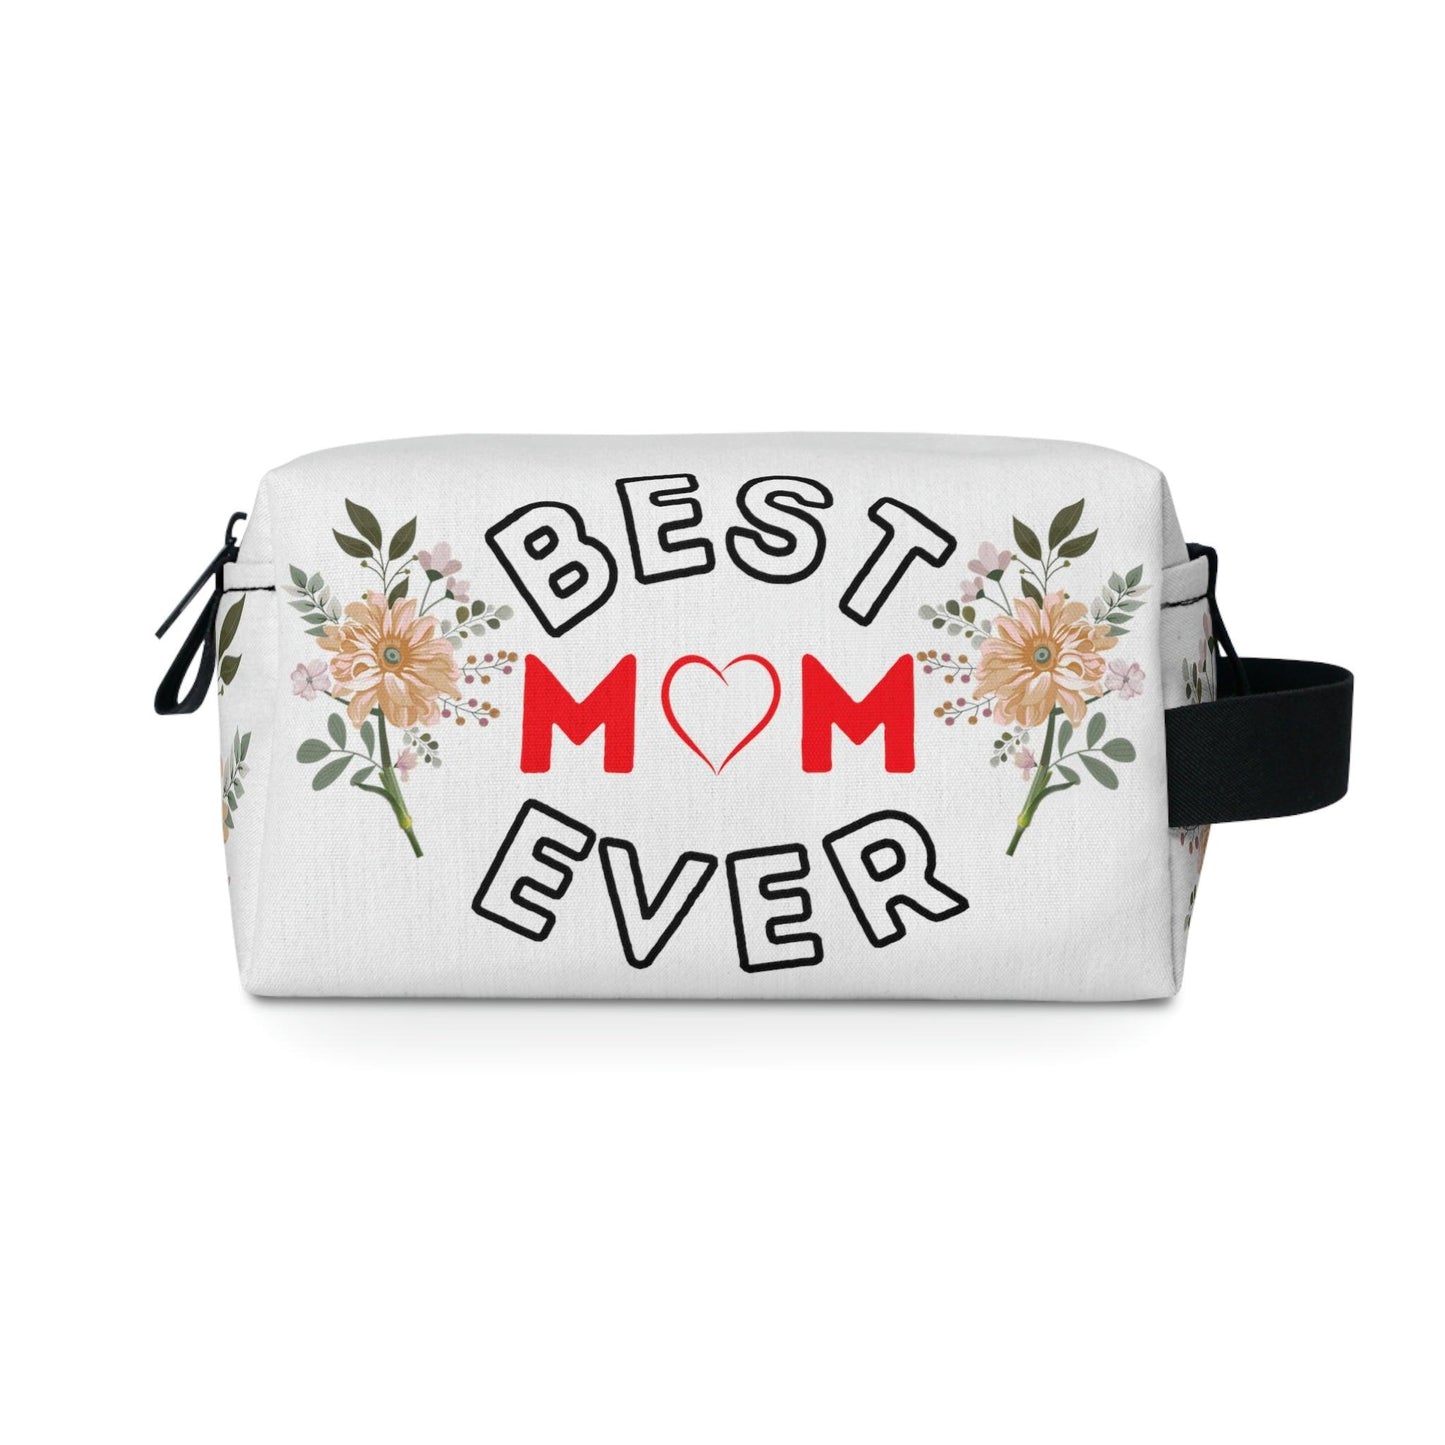 Best Mom Ever Makeup Bag | Cosmetic Bag | Travel bag | Toiletry Bag Women | Cute makeup bag | Makeup pouch | Aesthetic makeup bag - Giftsmojo